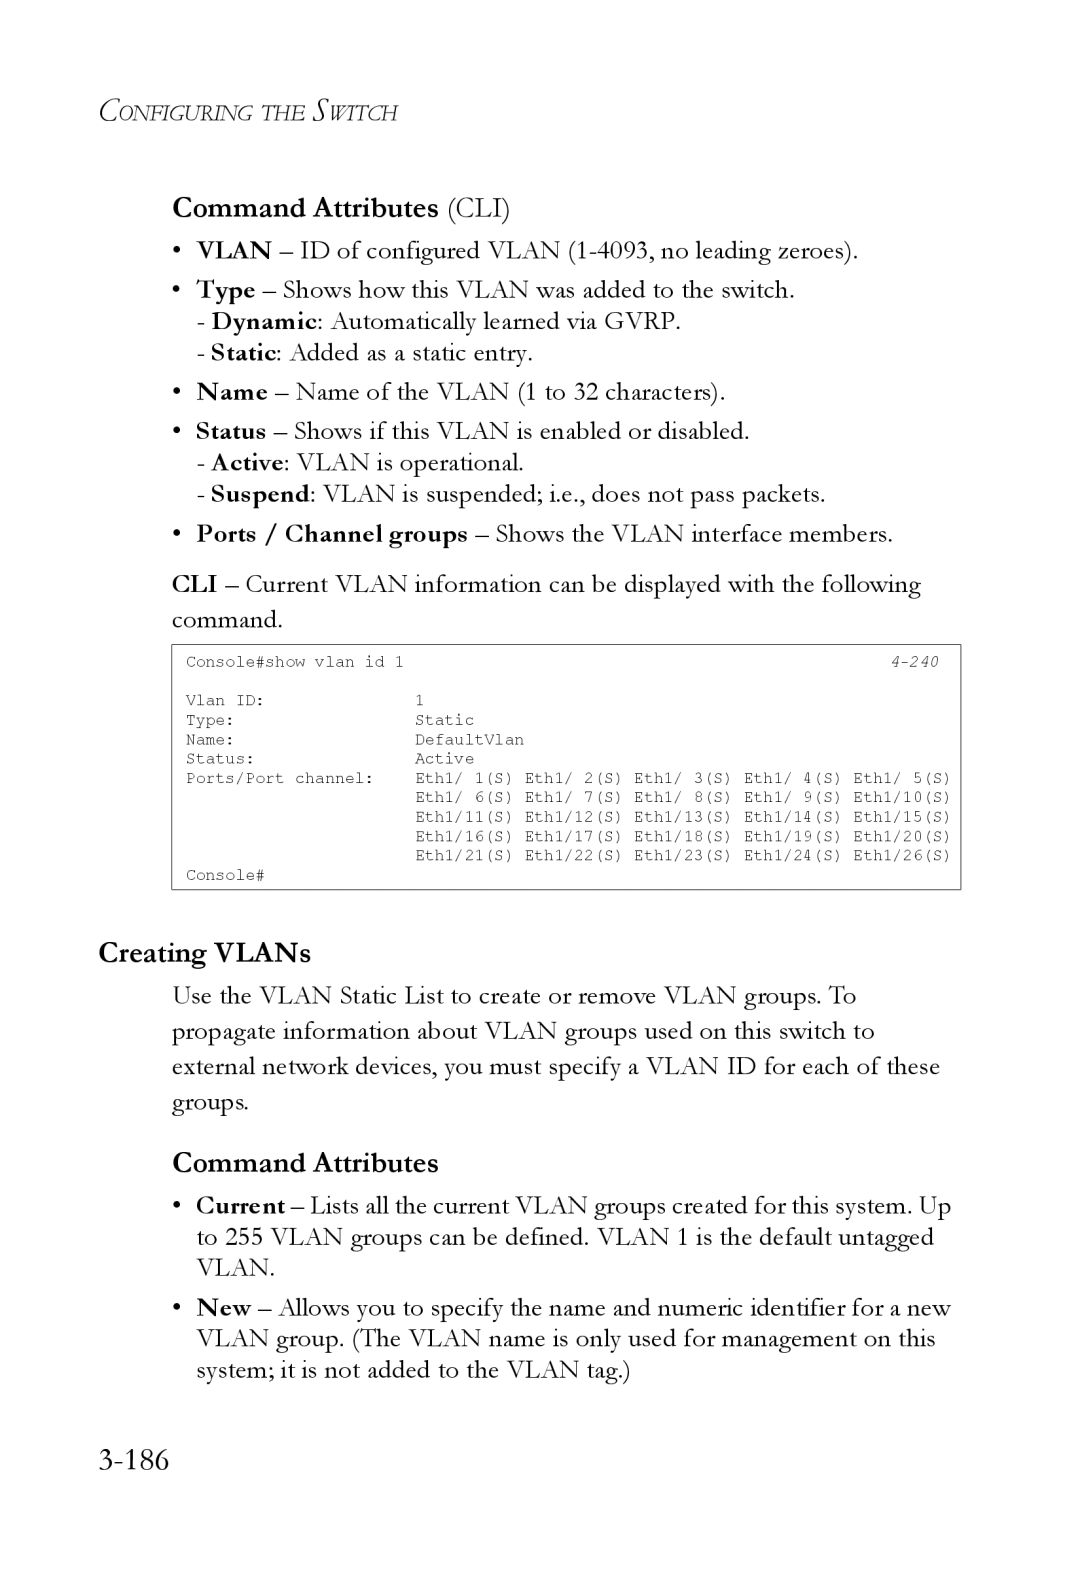 SMC Networks SMC6824M manual 186, Command Attributes CLI, Creating VLANs 